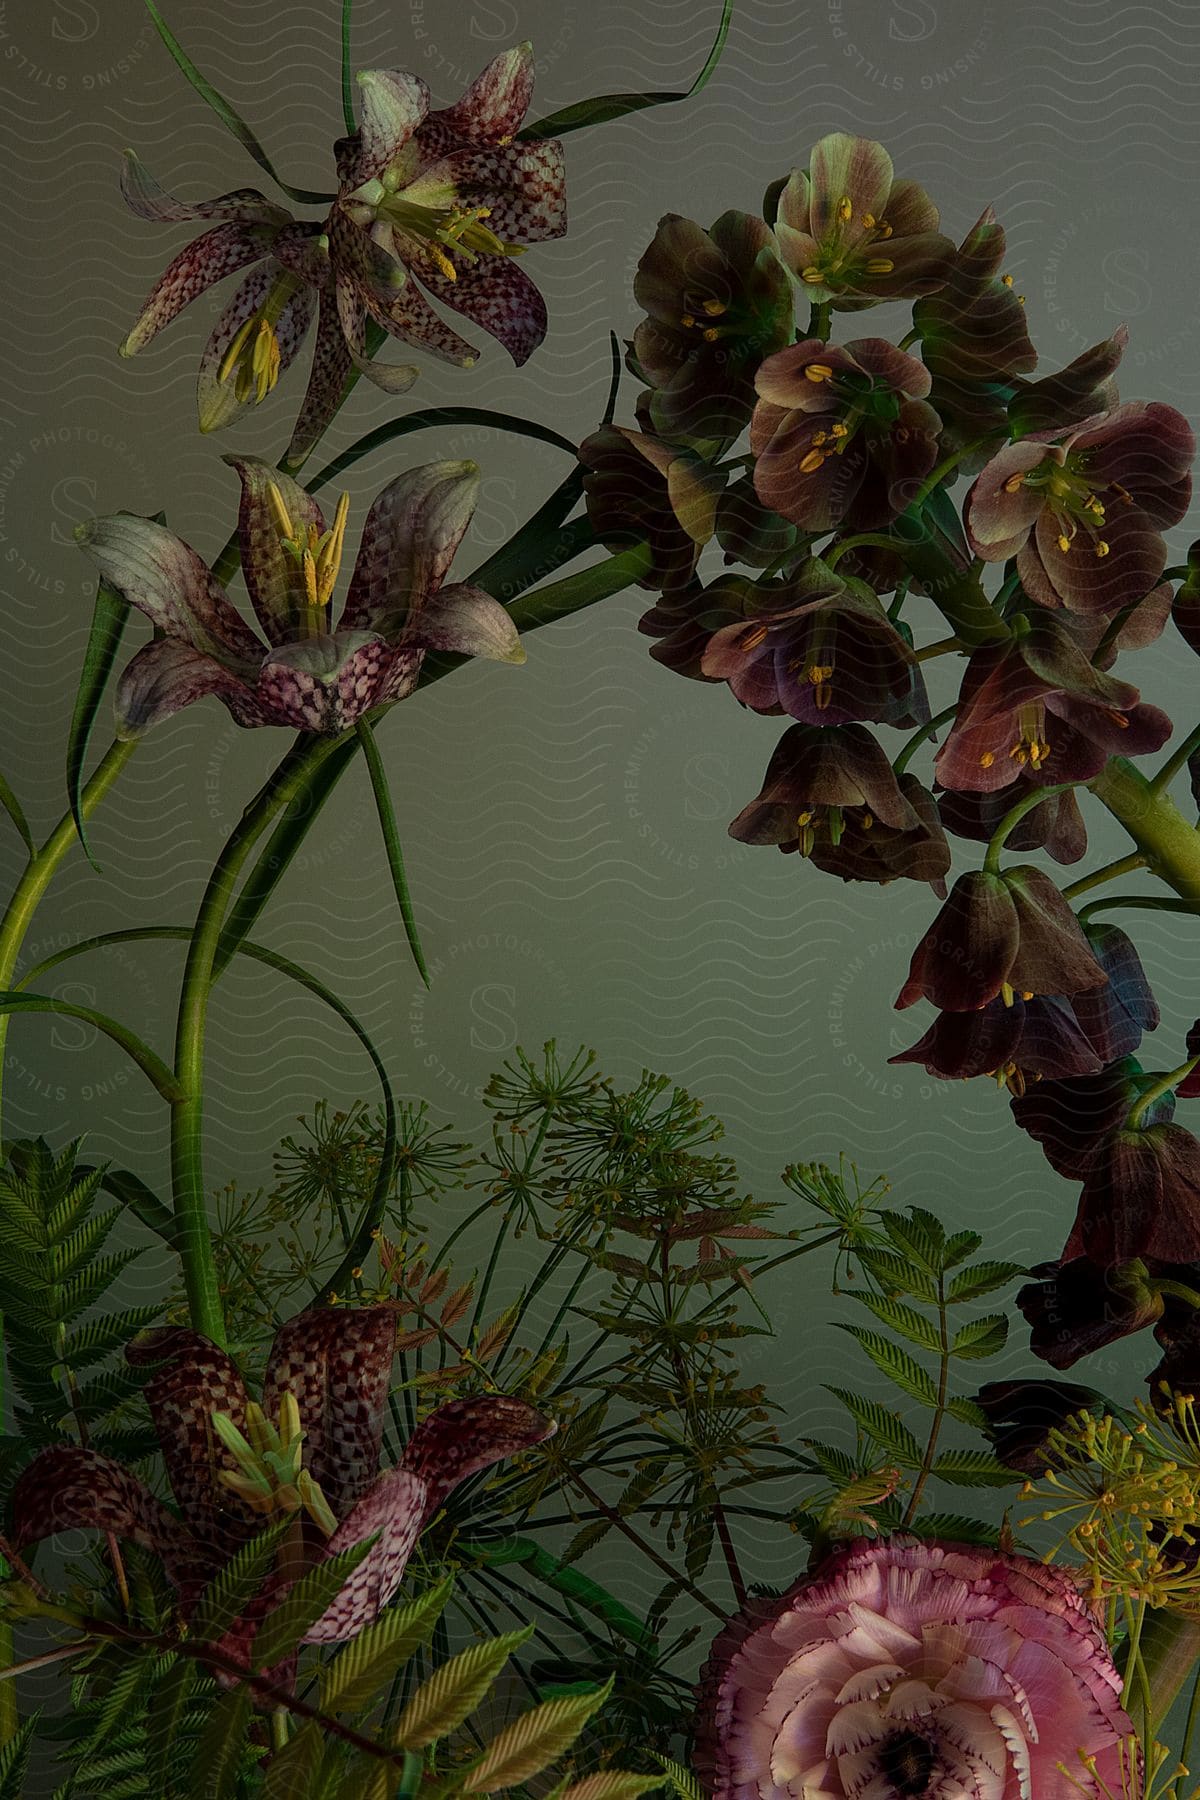 flowers arrangement